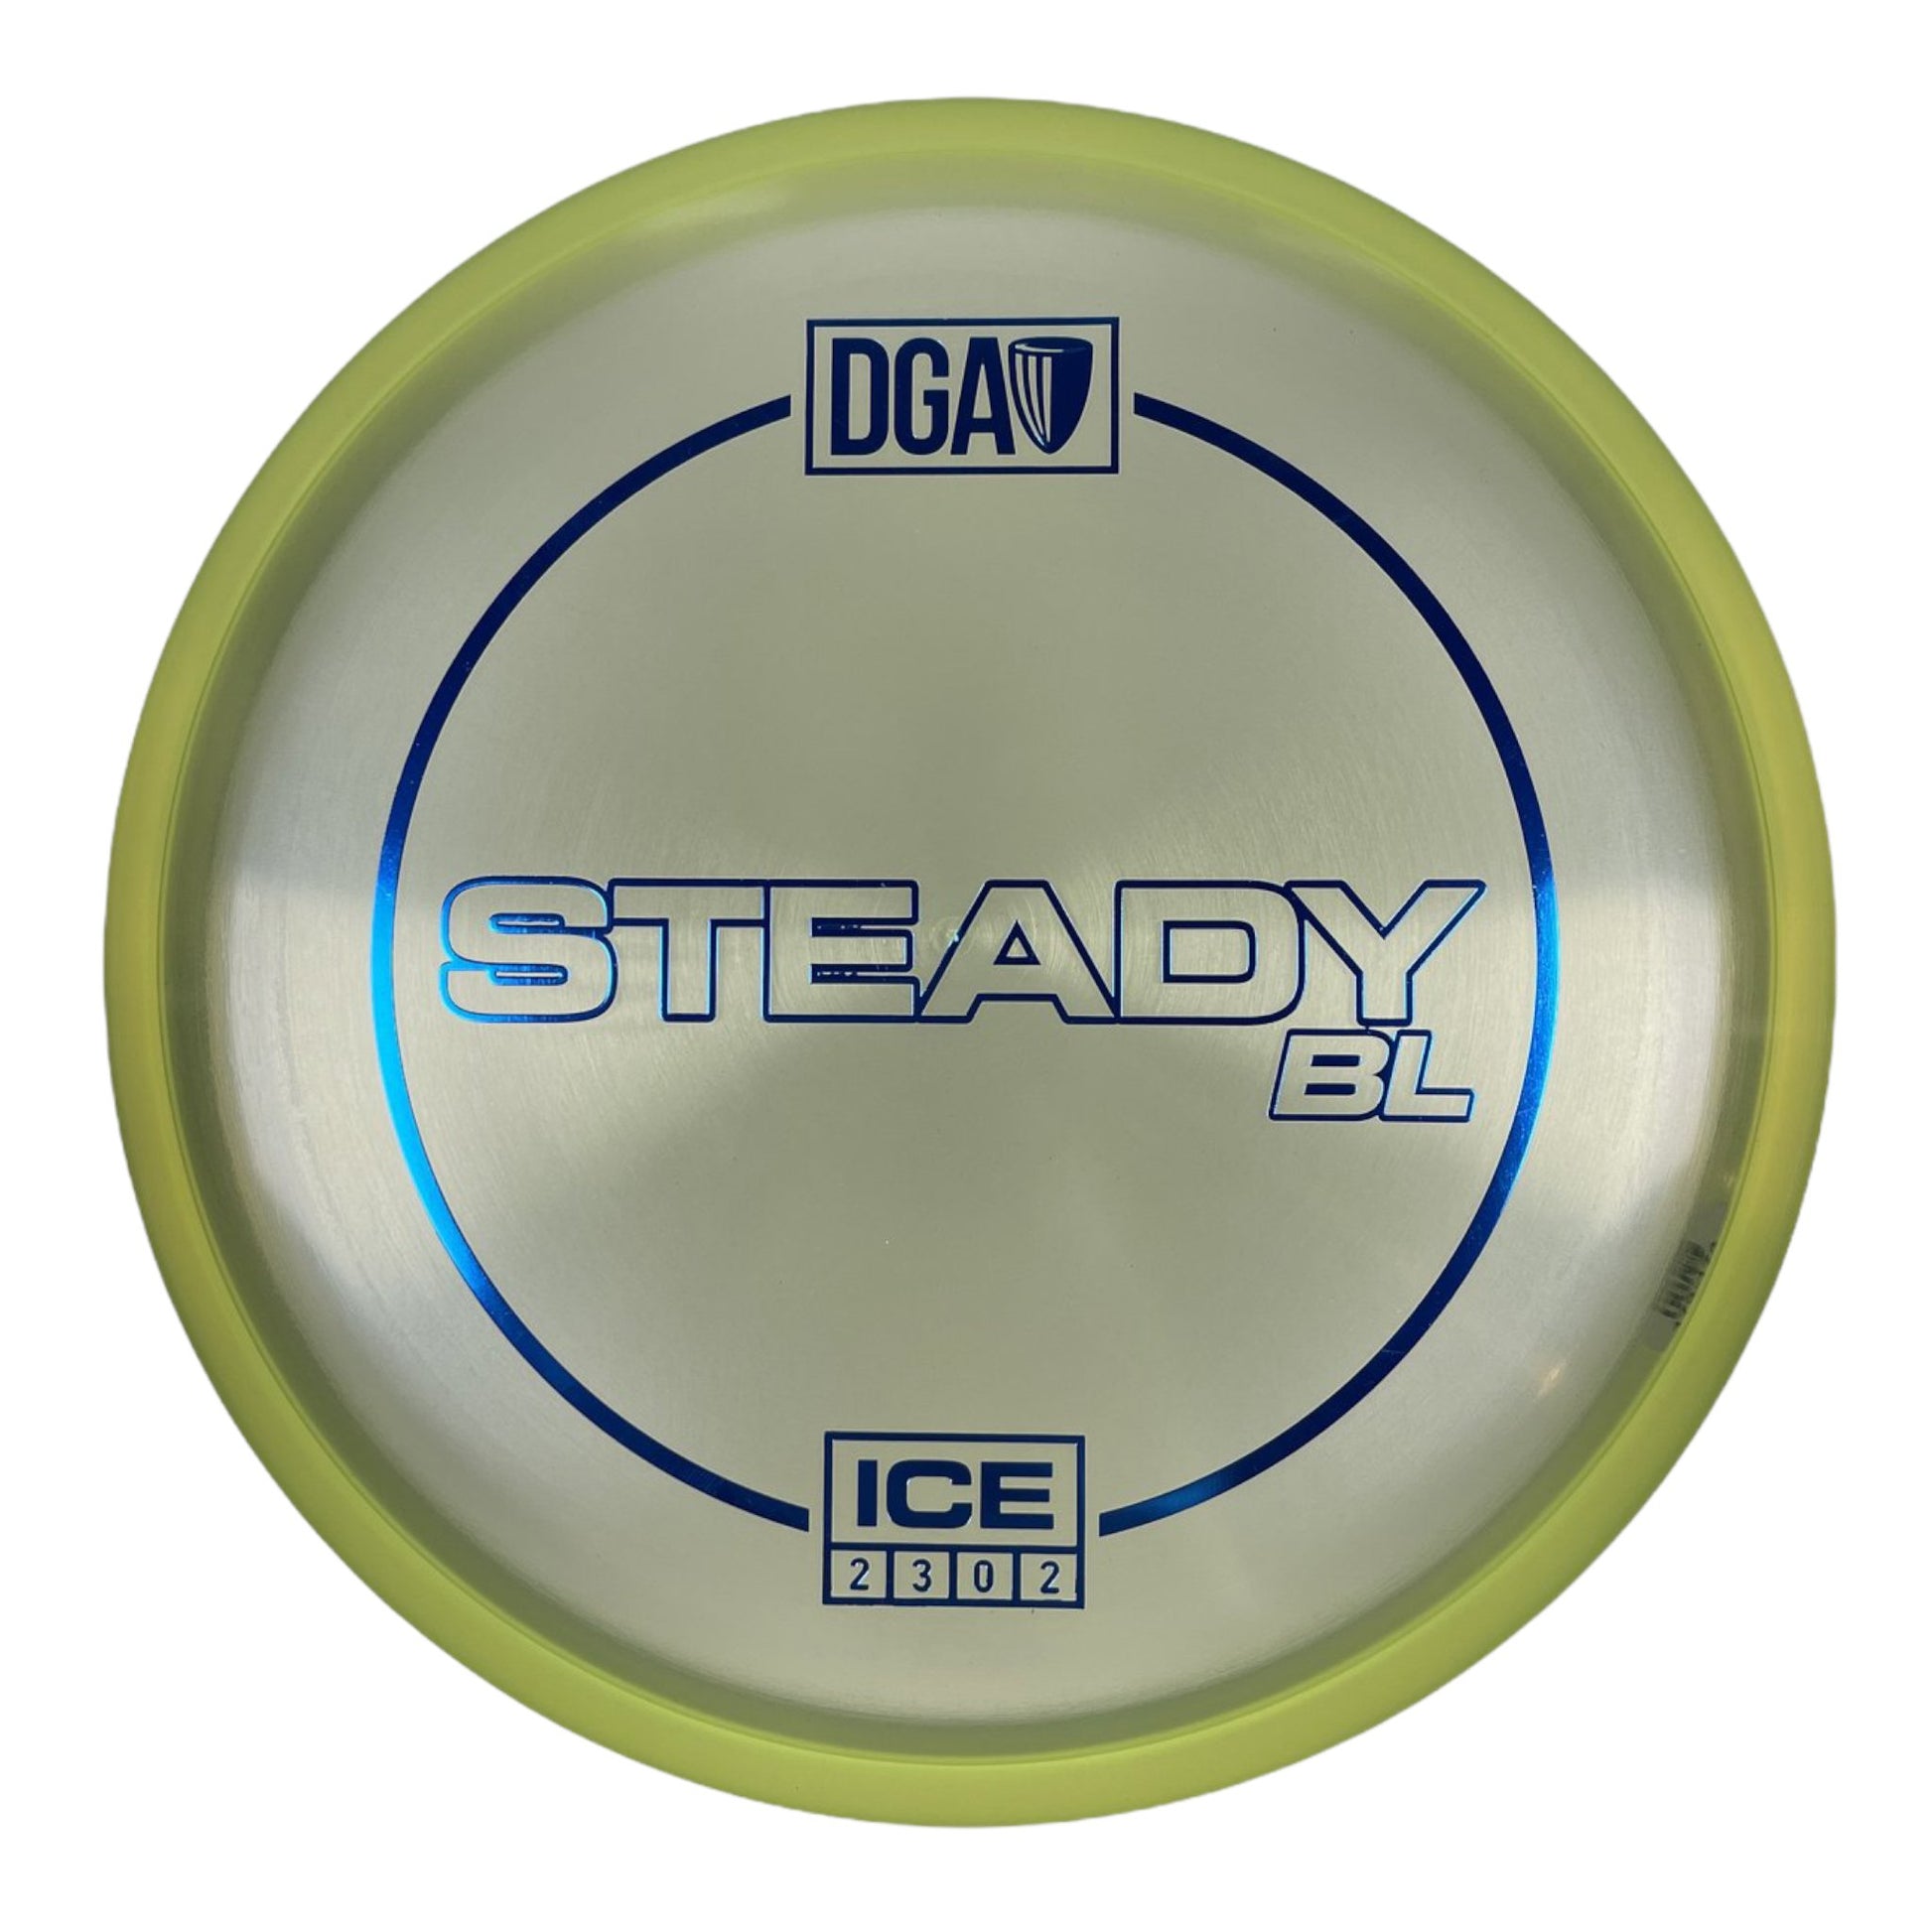 DGA Steady BL | ICE | Yellow/Blue 174g Disc Golf